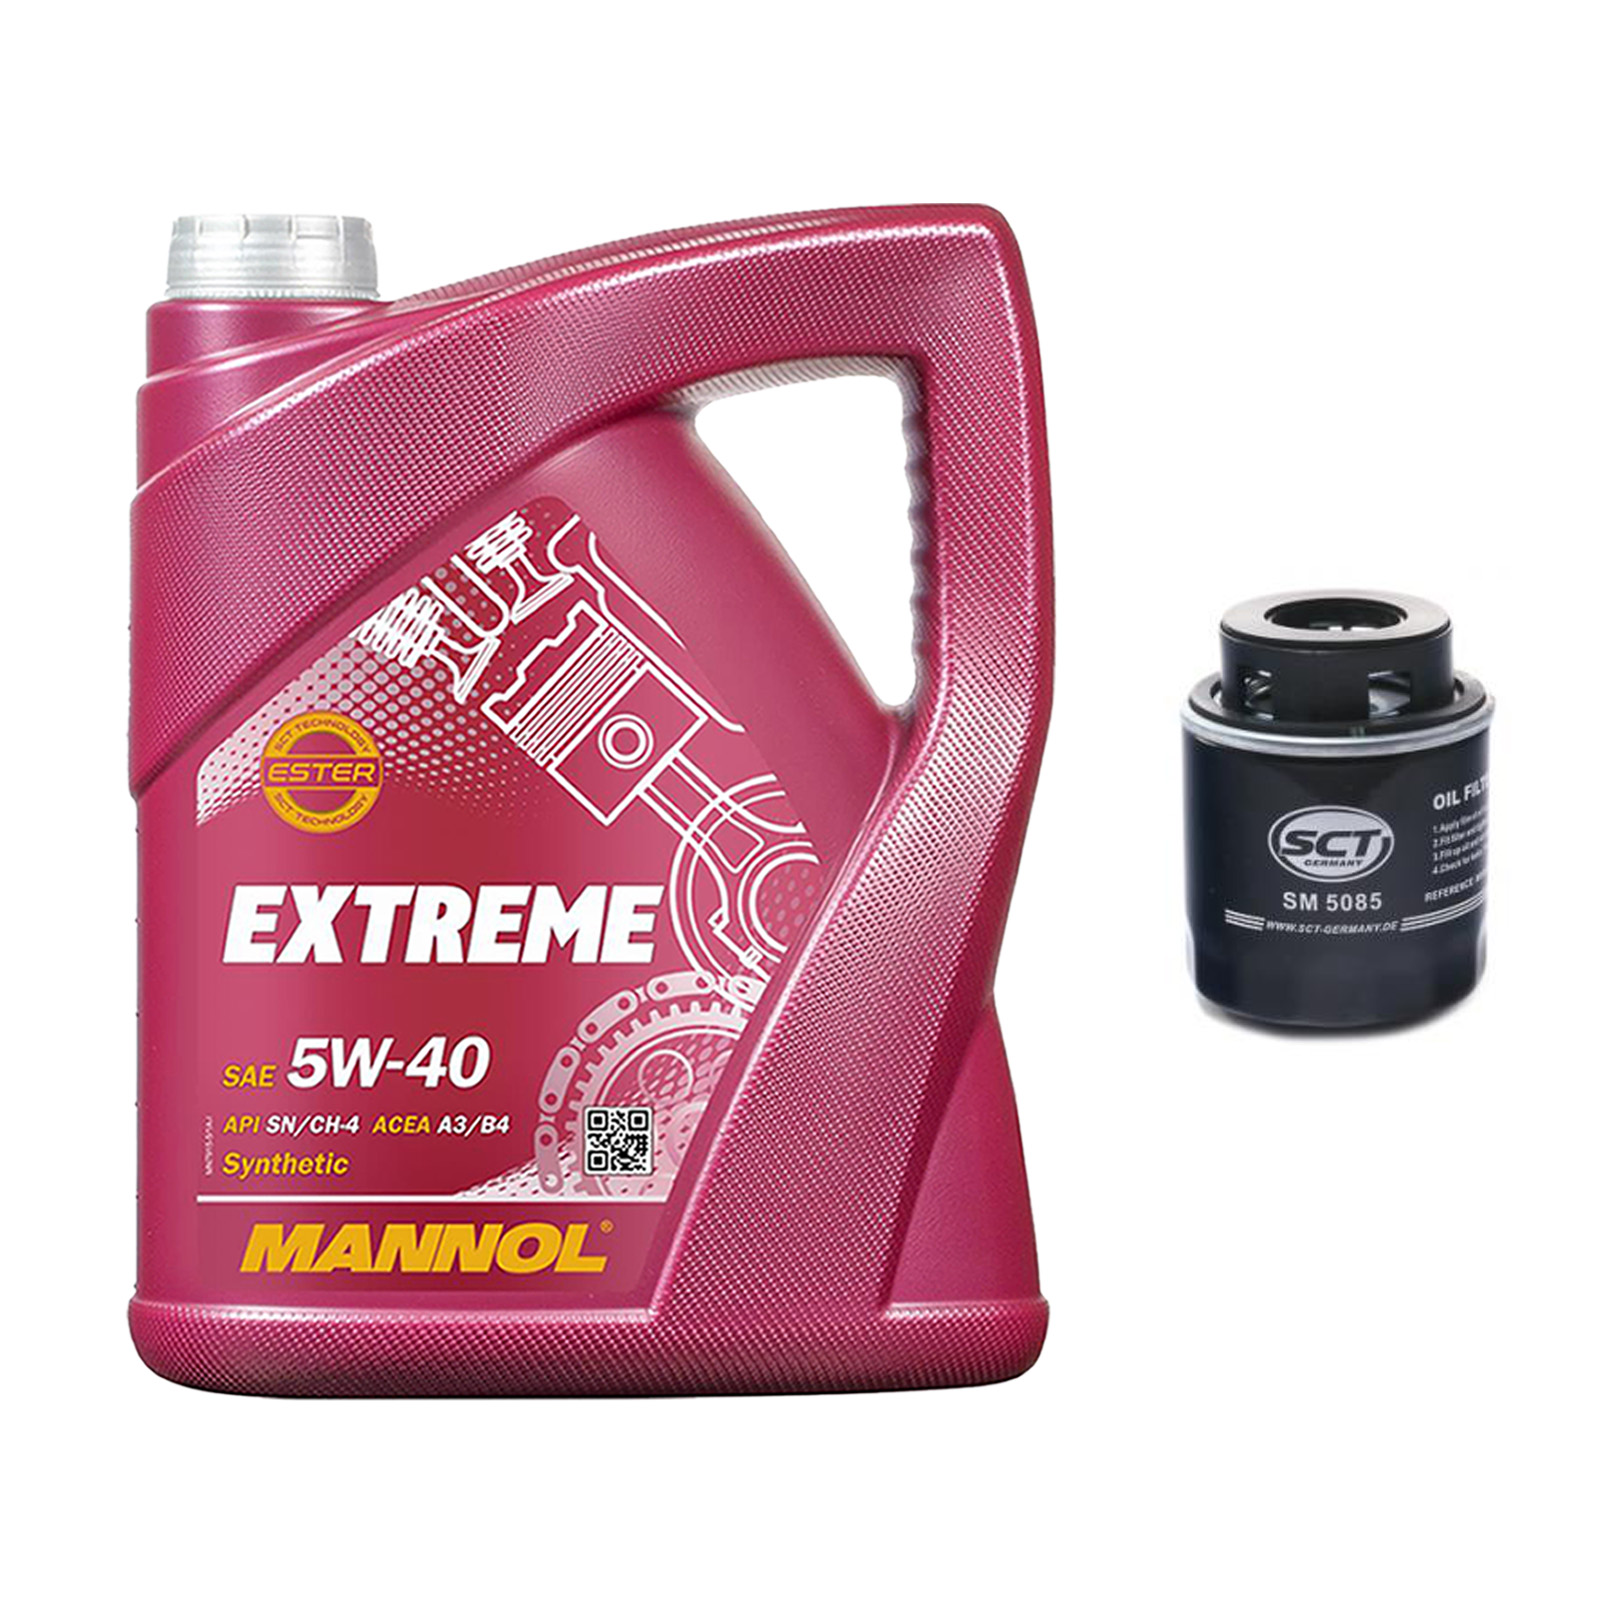 Inspektionskit MANNOL Extreme 5W-40 für Skoda Roomster 1.6 Fabia Superb 1.4 Tsi